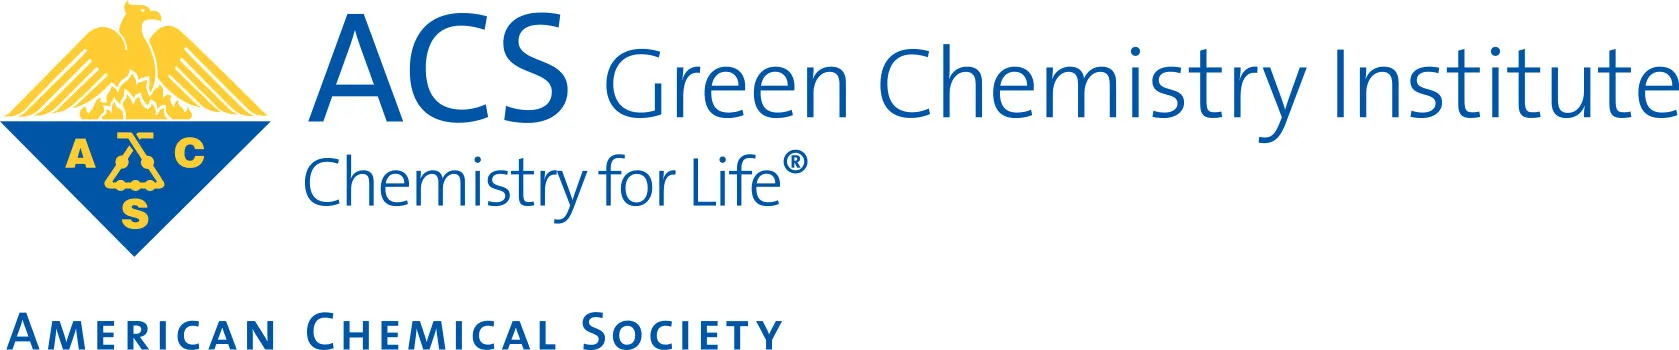 ACS Green Chemistry